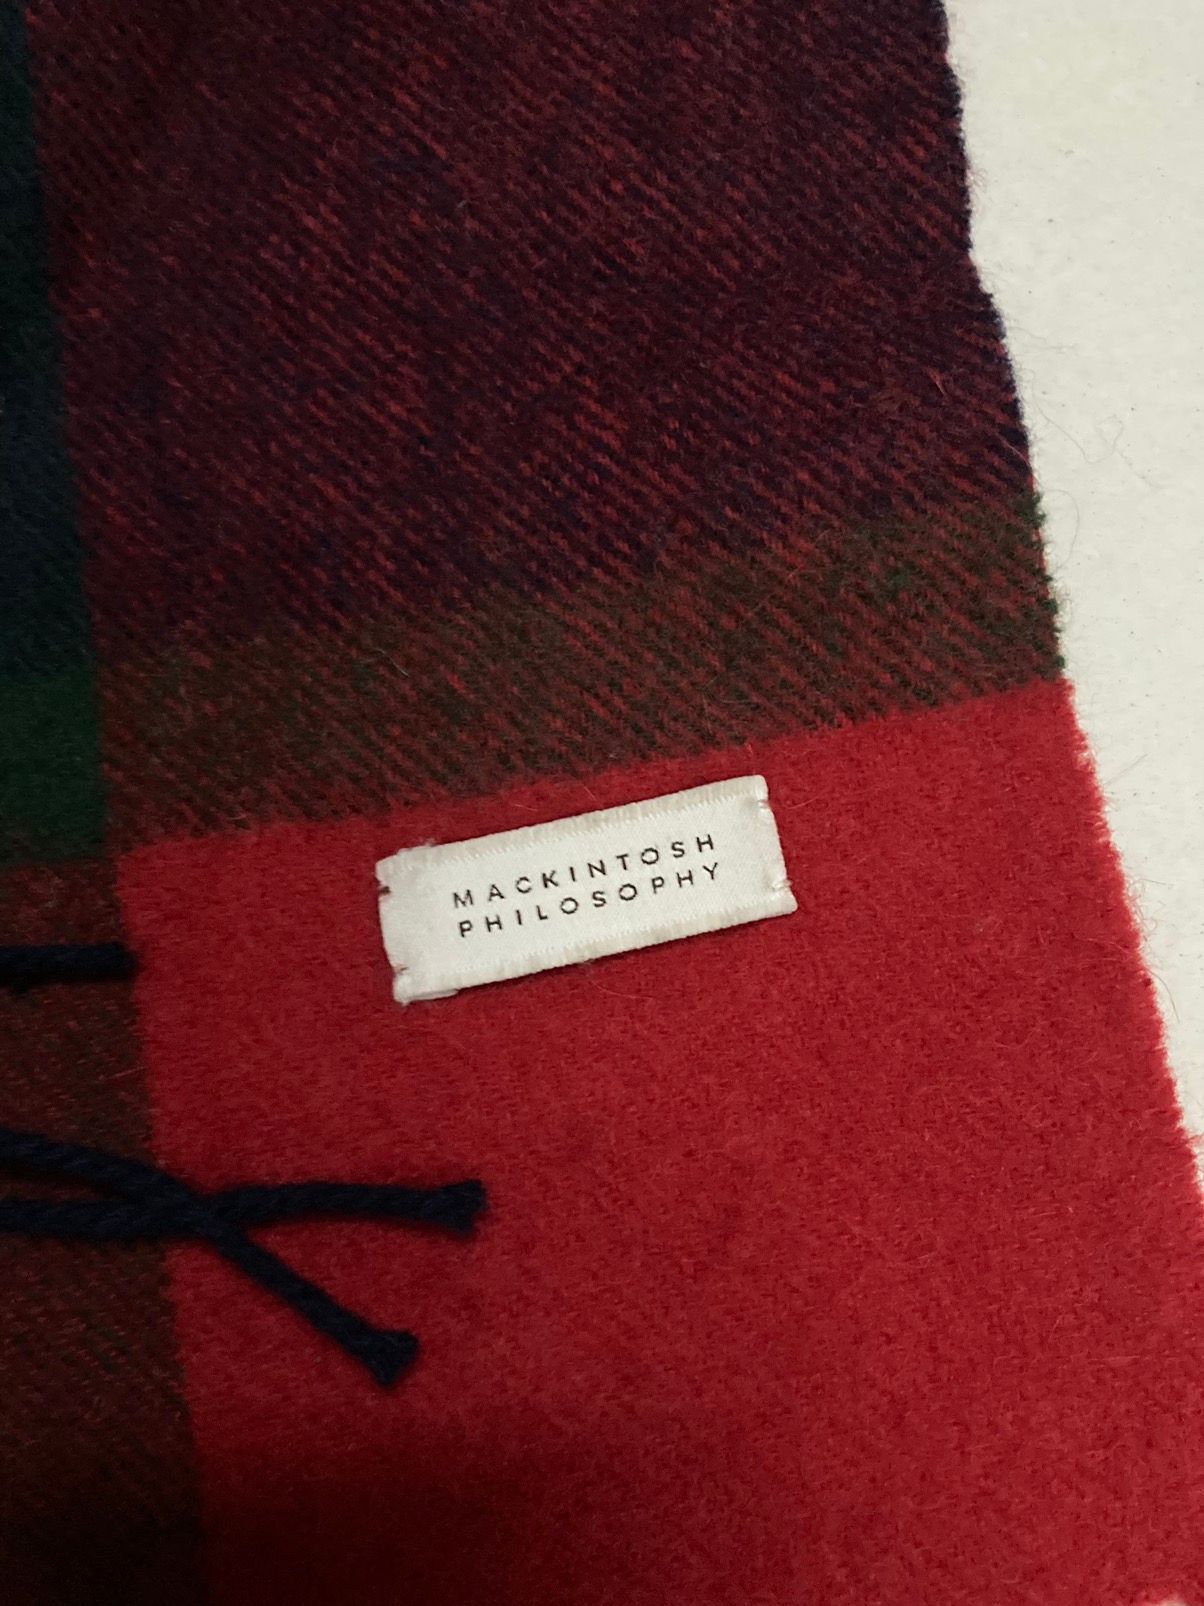 Mackintosh Philosophy Wool Muffler Scarf - 7